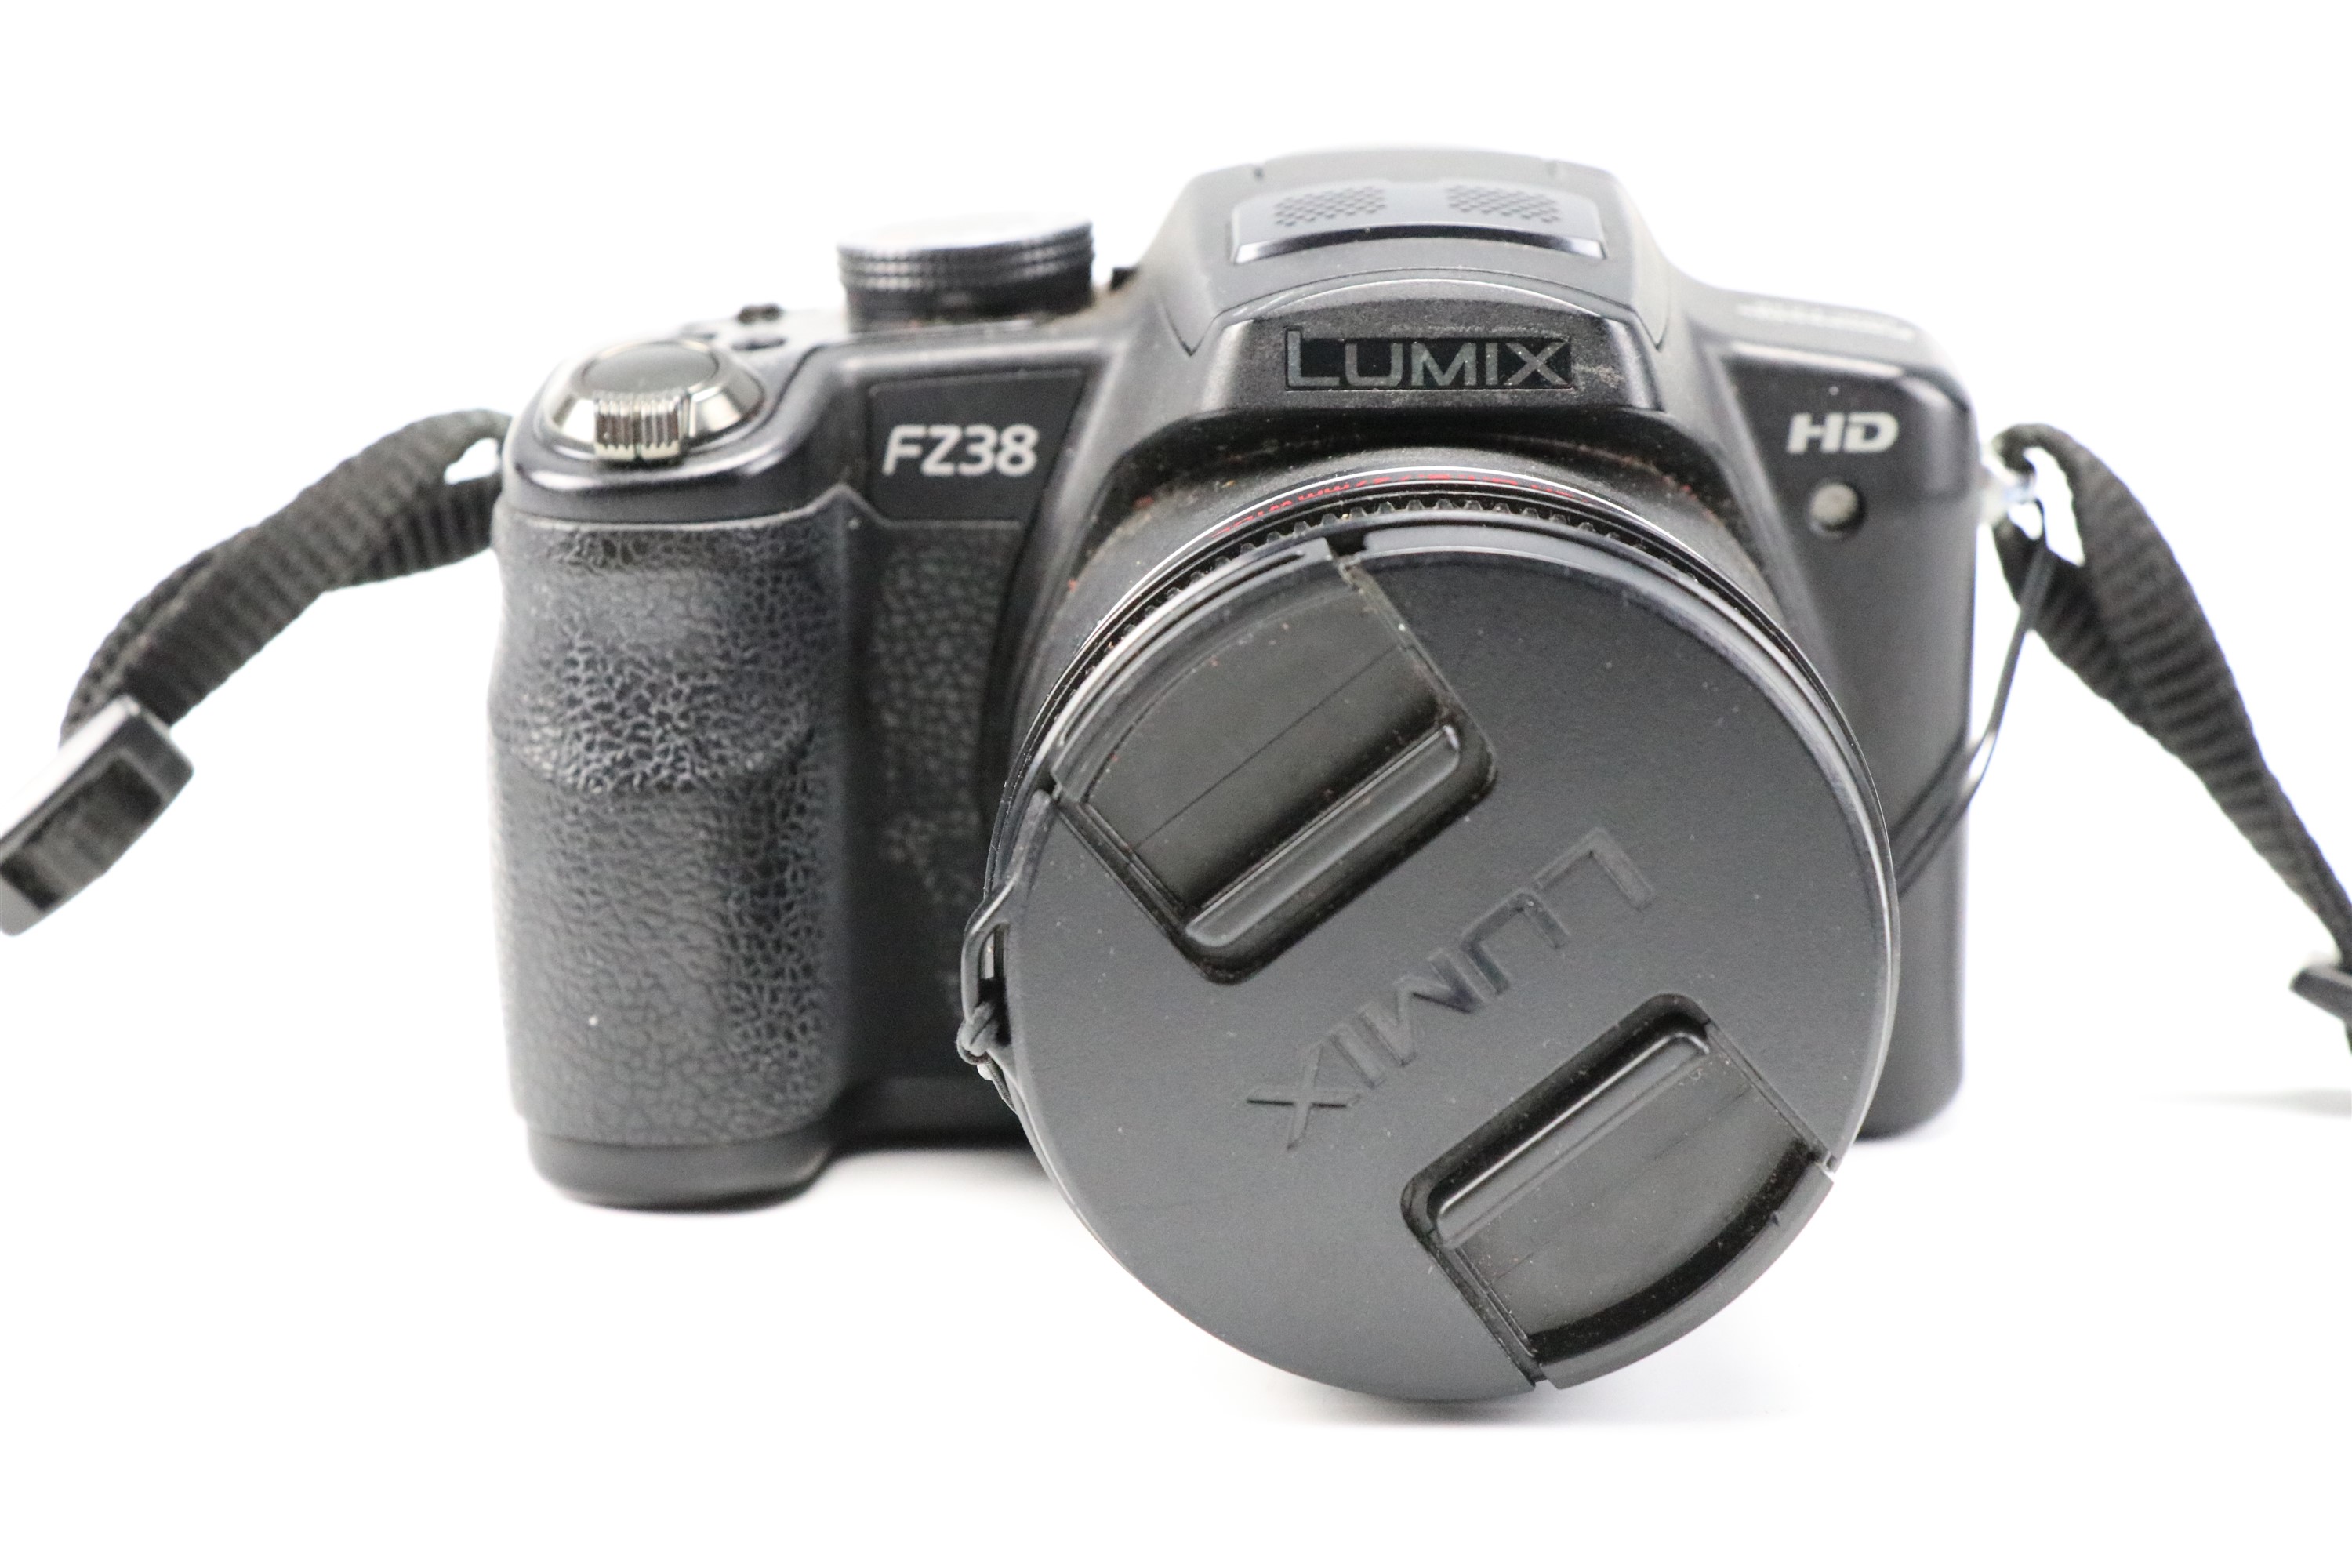 Lumix F238 HD, Canon EOS IX, Canon Digital IXUS 430, Konica Minolta Dimage 25 and Konica C35 EFP - Image 12 of 24